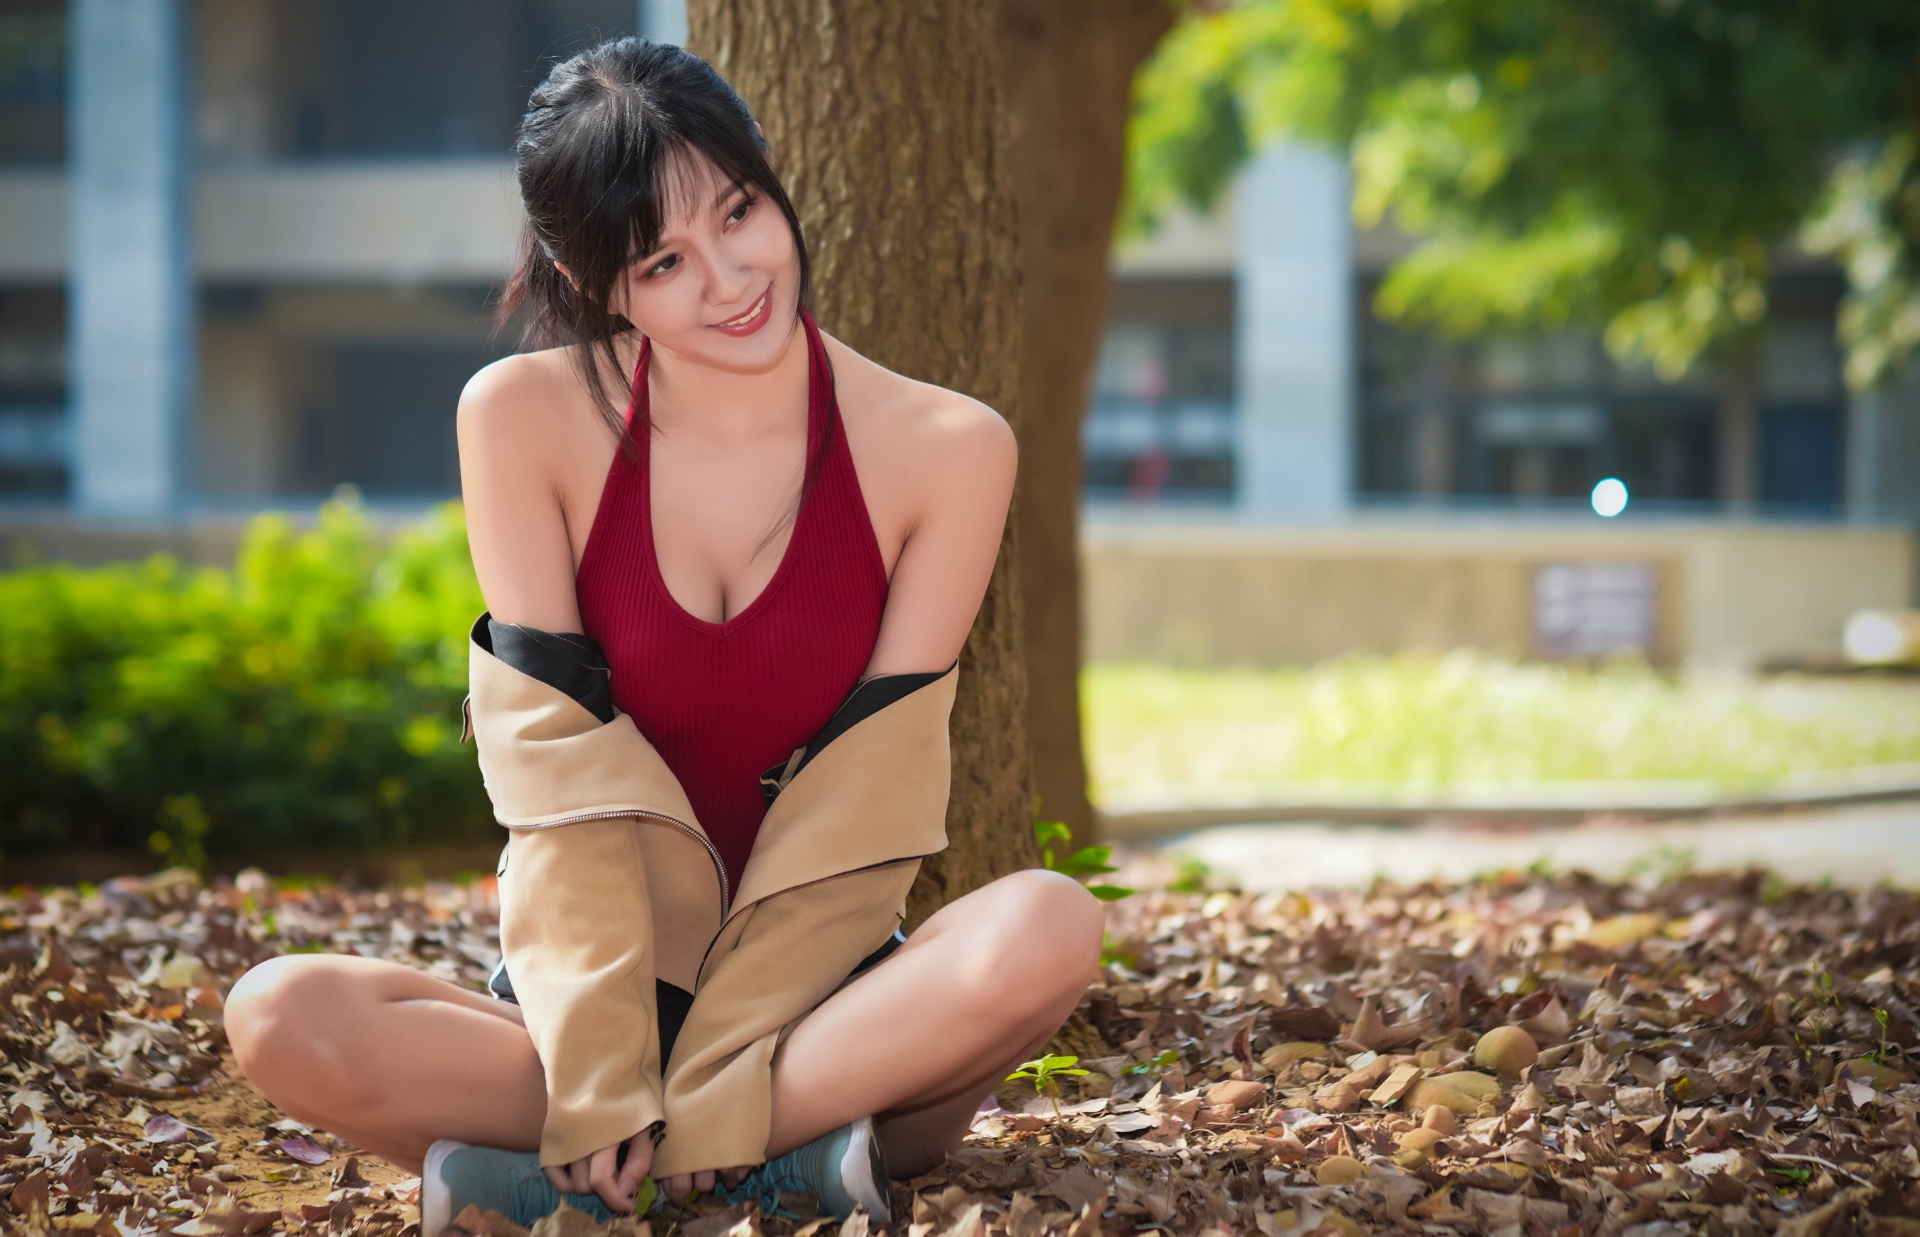 Asian Model Women Long Hair Depth Of Field Sitting Legs Crossed Bare Shoulders Red Shirt Leaves Tree 1920x1237